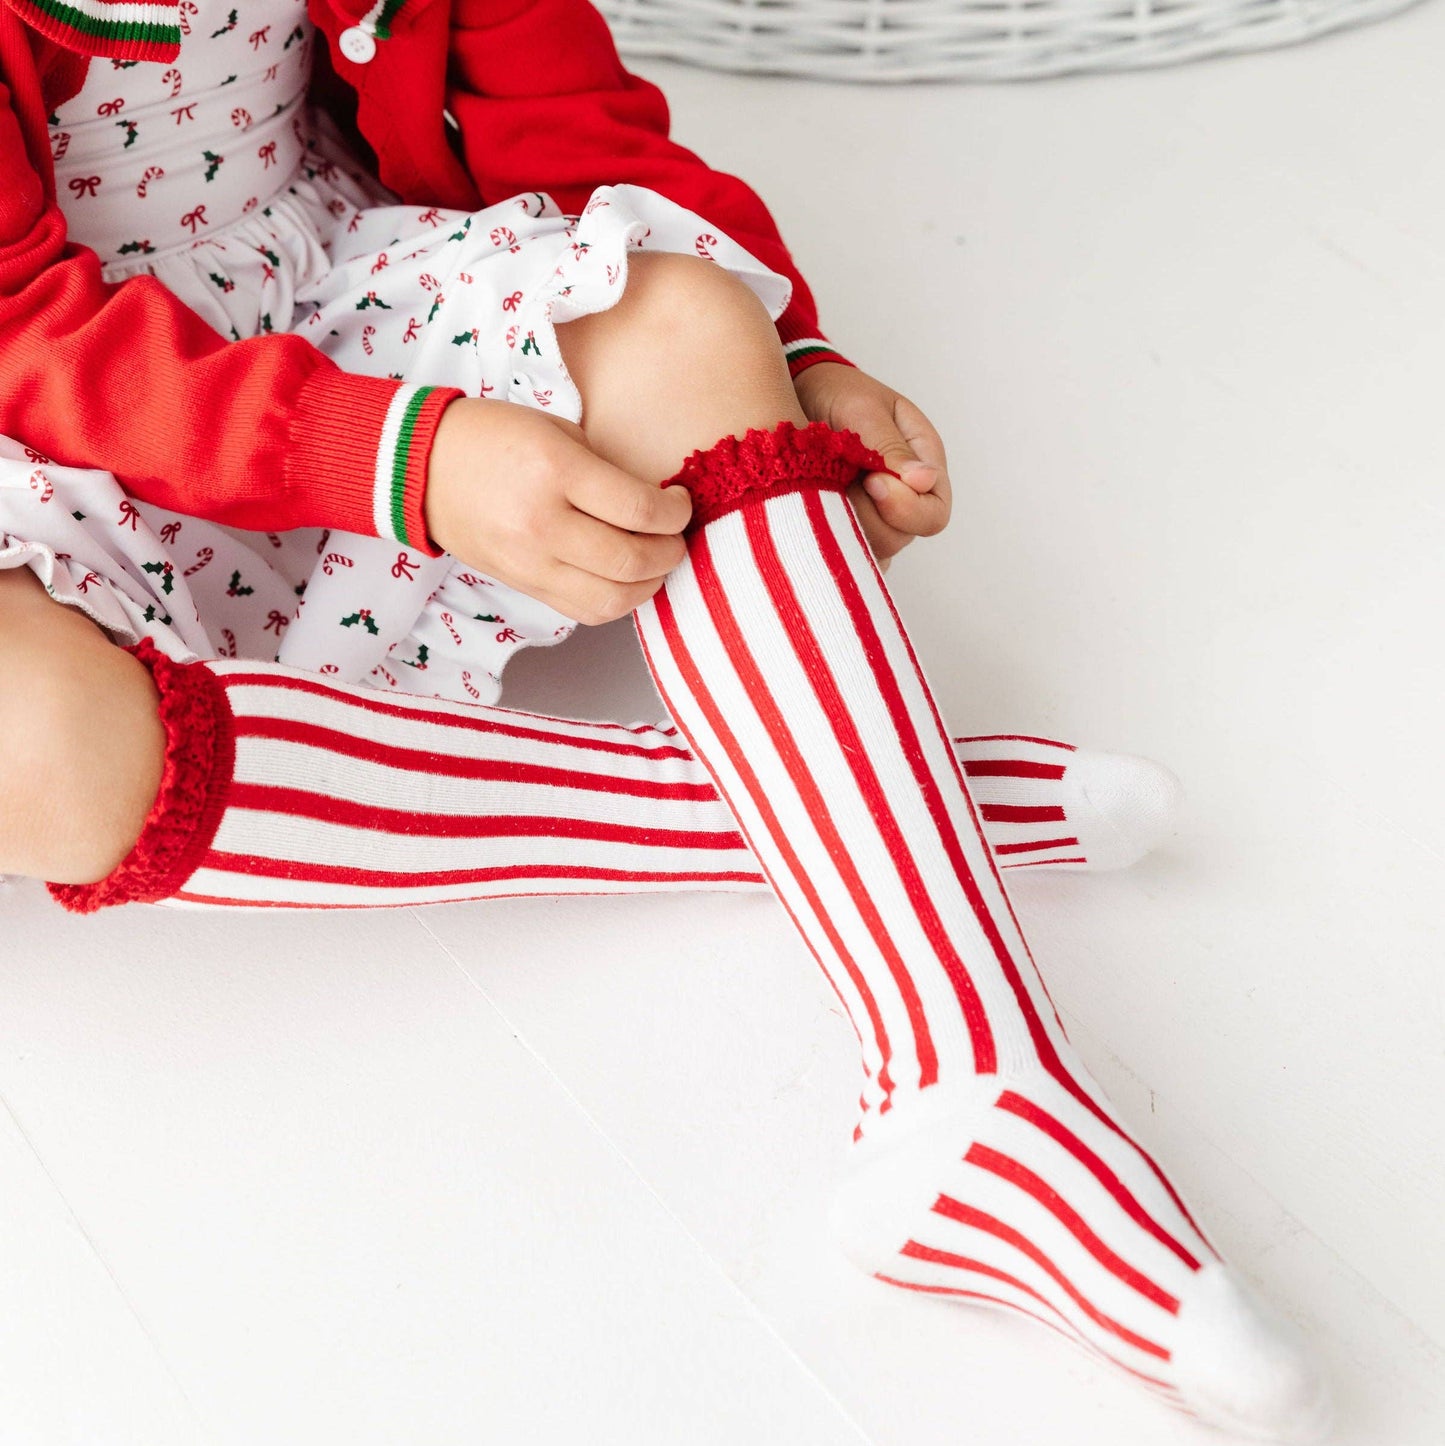 Classic Christmas Knee High Socks 3-Pack: 7-10 YEARS